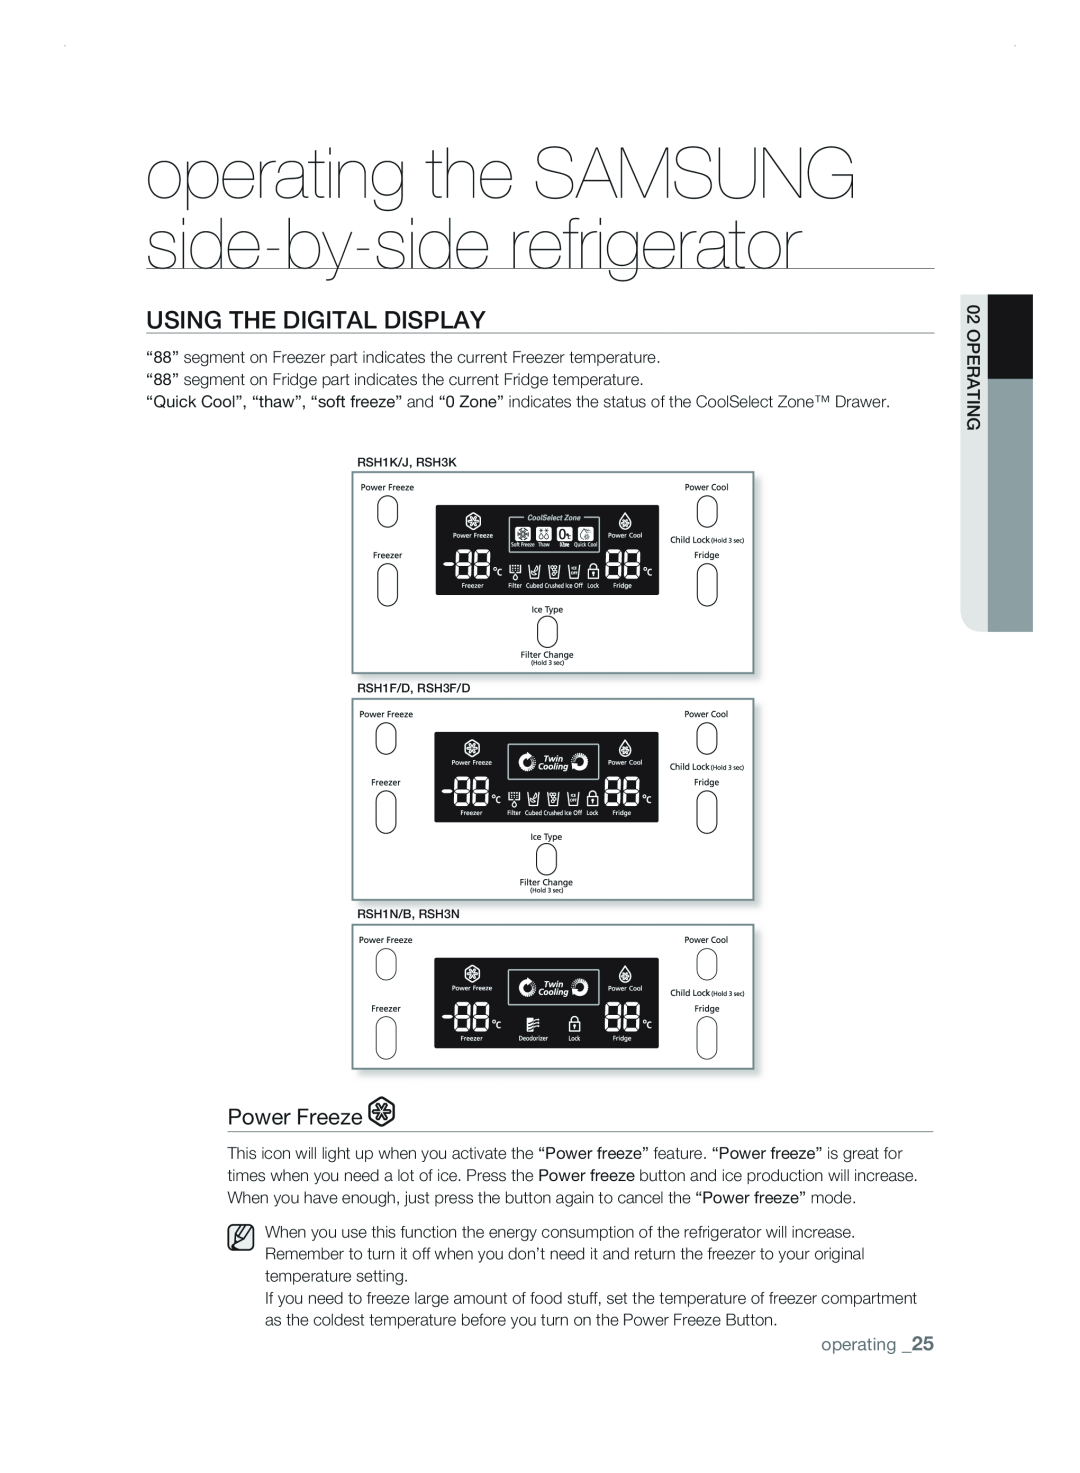 Samsung RSH3F, RSH3N, RSH3D, RSH3K using tHE DigitaL DisPLay, Power Freeze, operating the SAMSUNG side-by-side refrigerator 